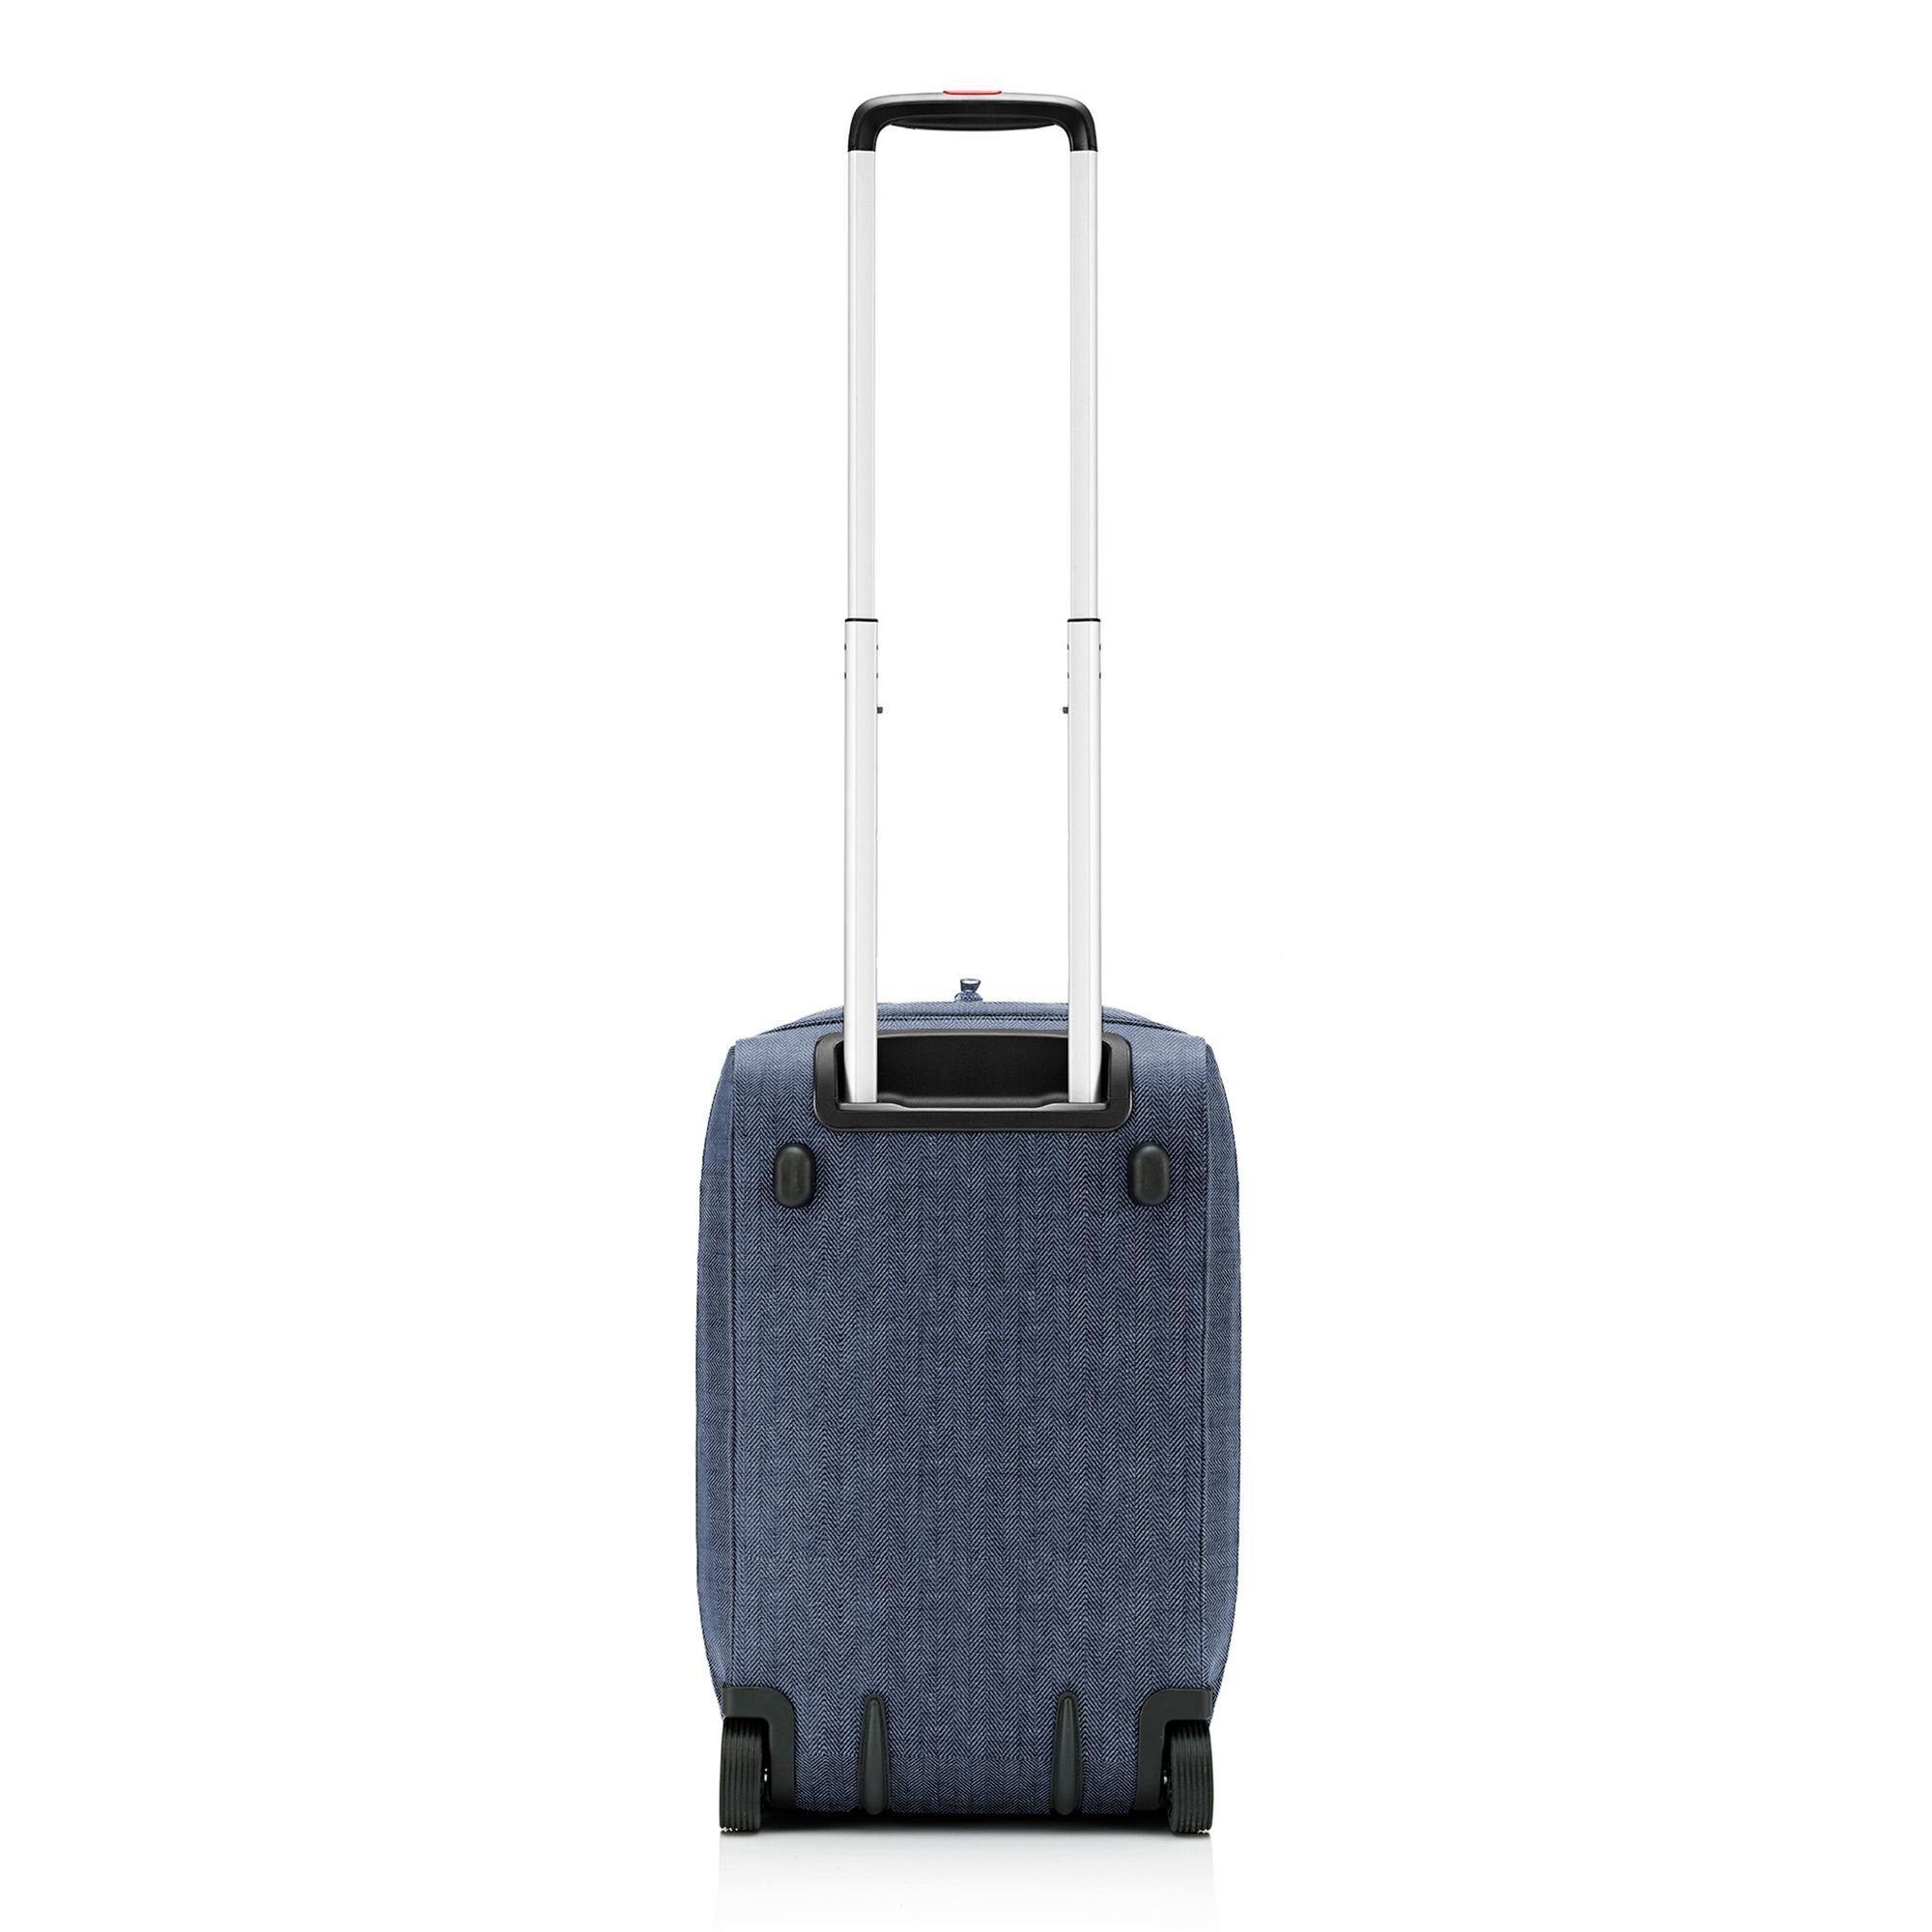 REISENTHEL® Handgepäck-Trolley Travelling, 2 Rollen, dark blue herringbone Polyester